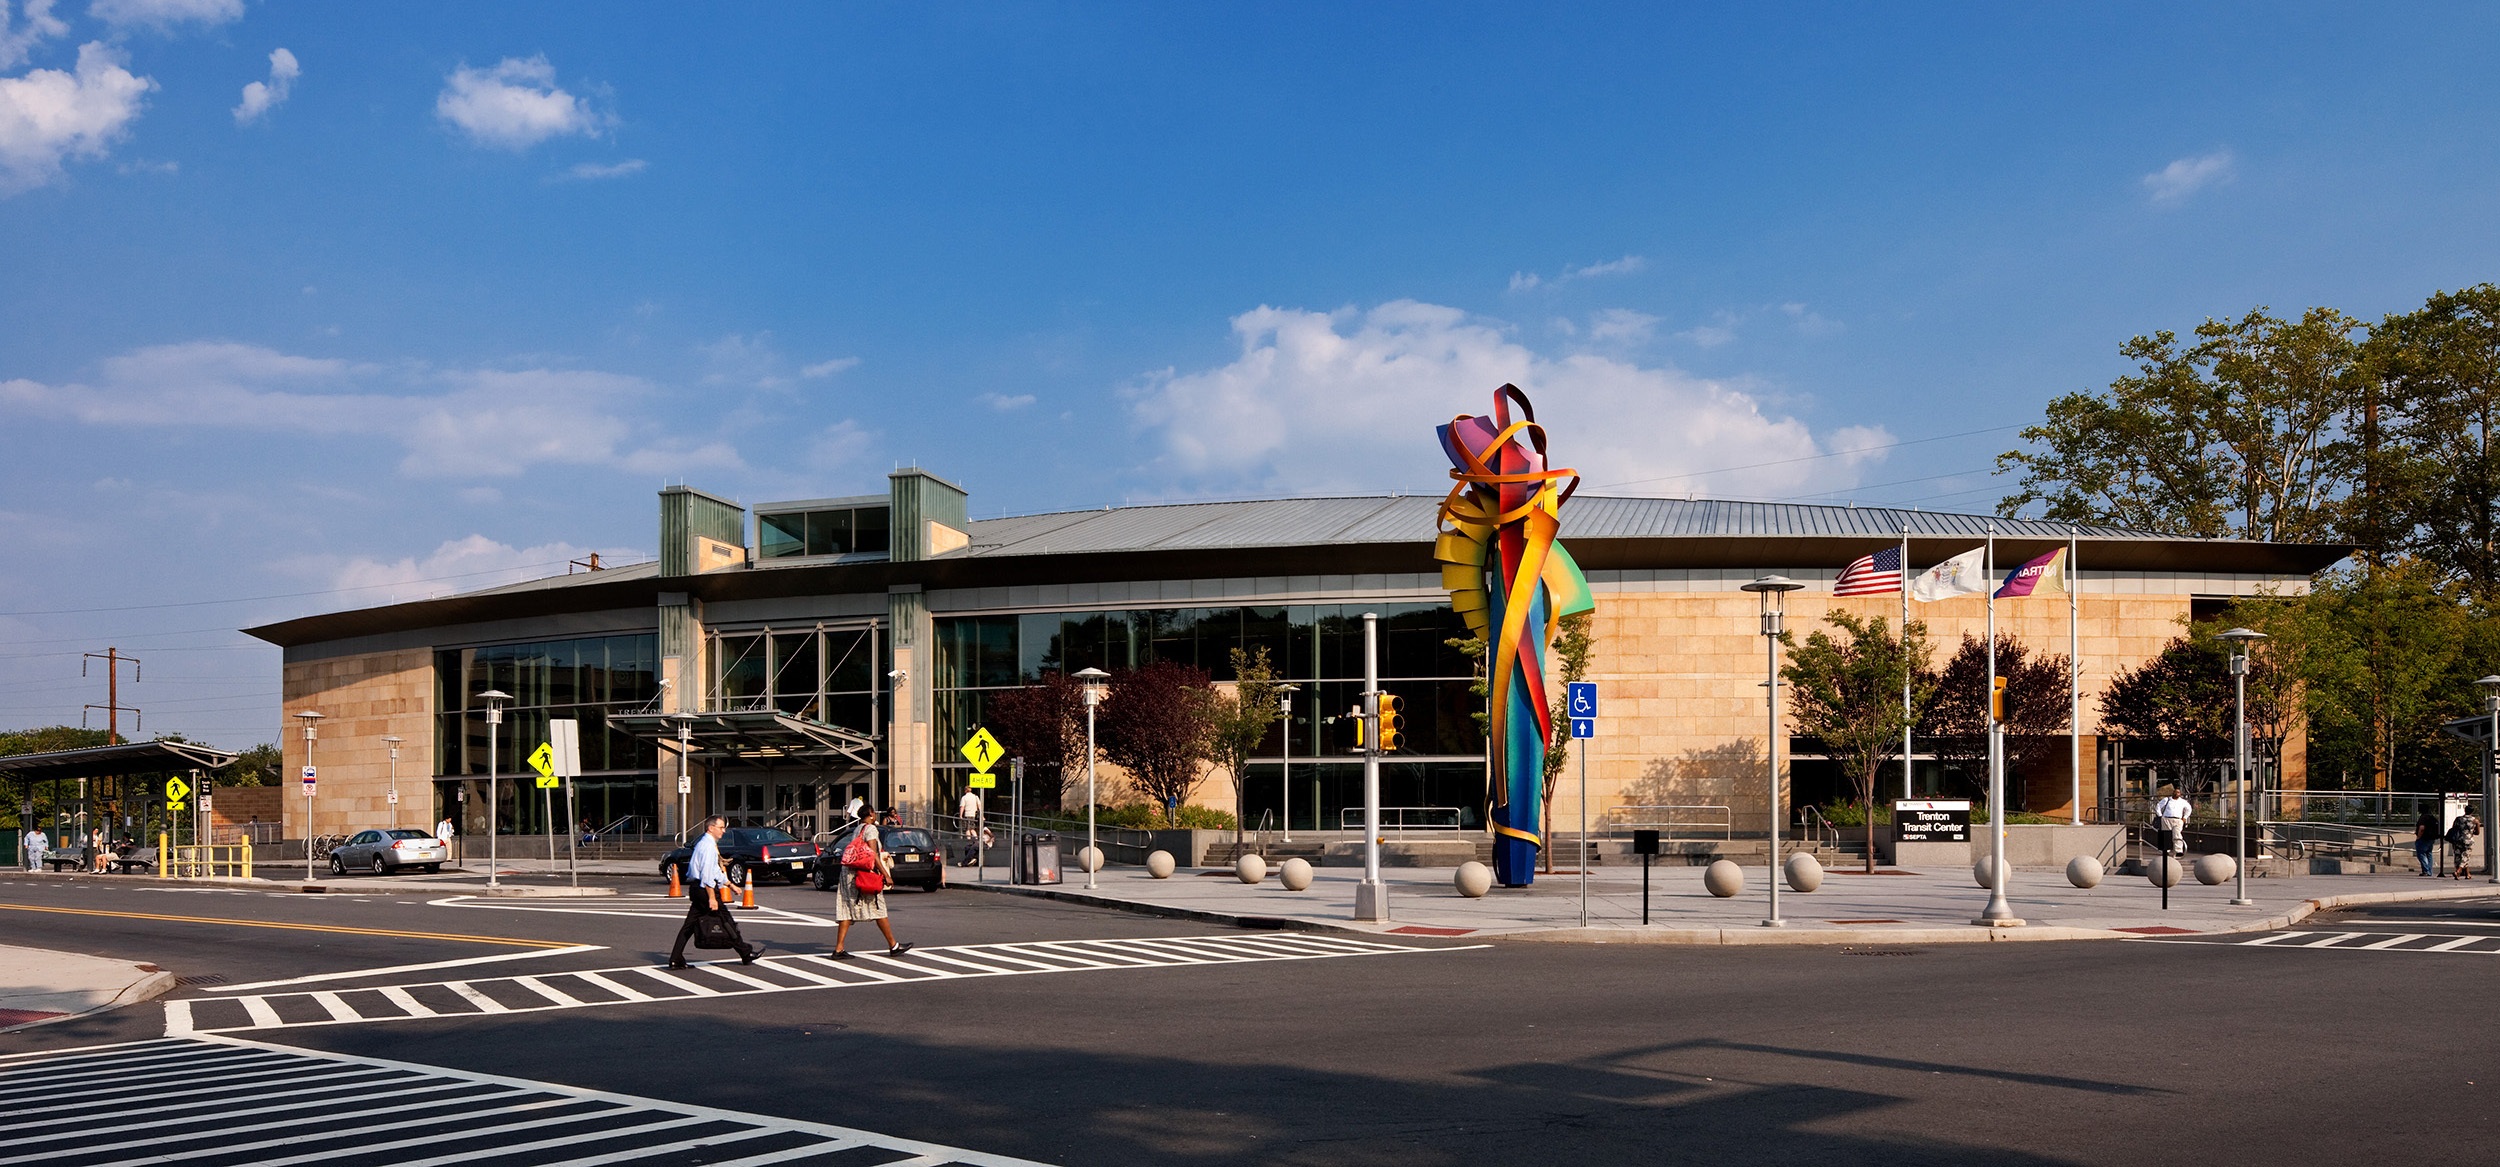 Trenton Transit Center façade and frontal view